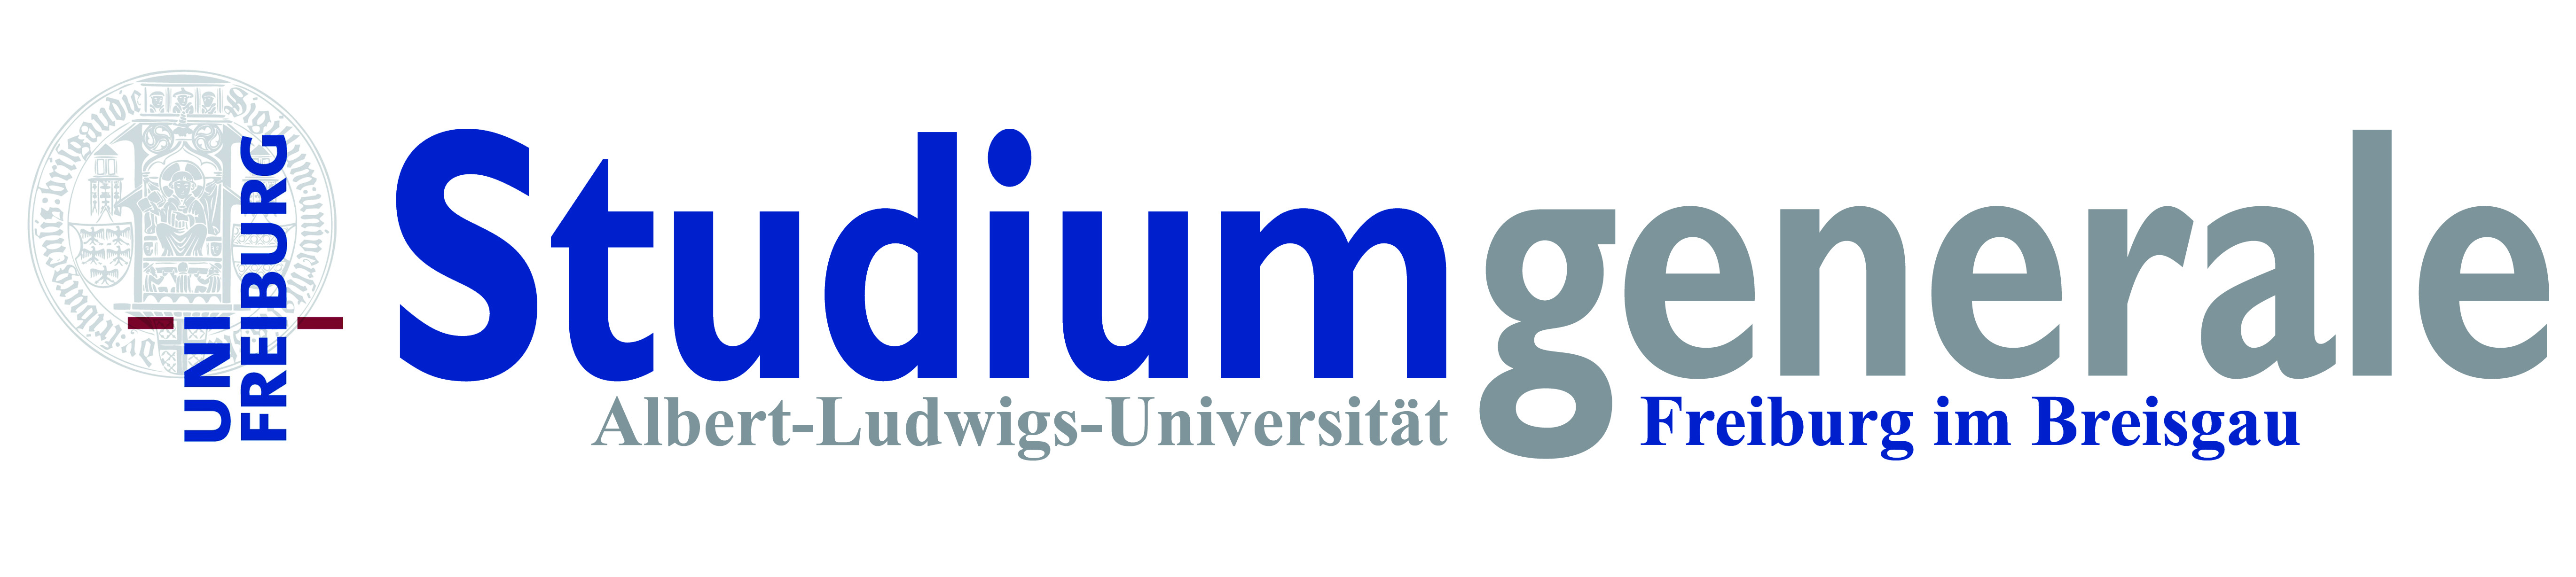 Logo Studium generale aktuell